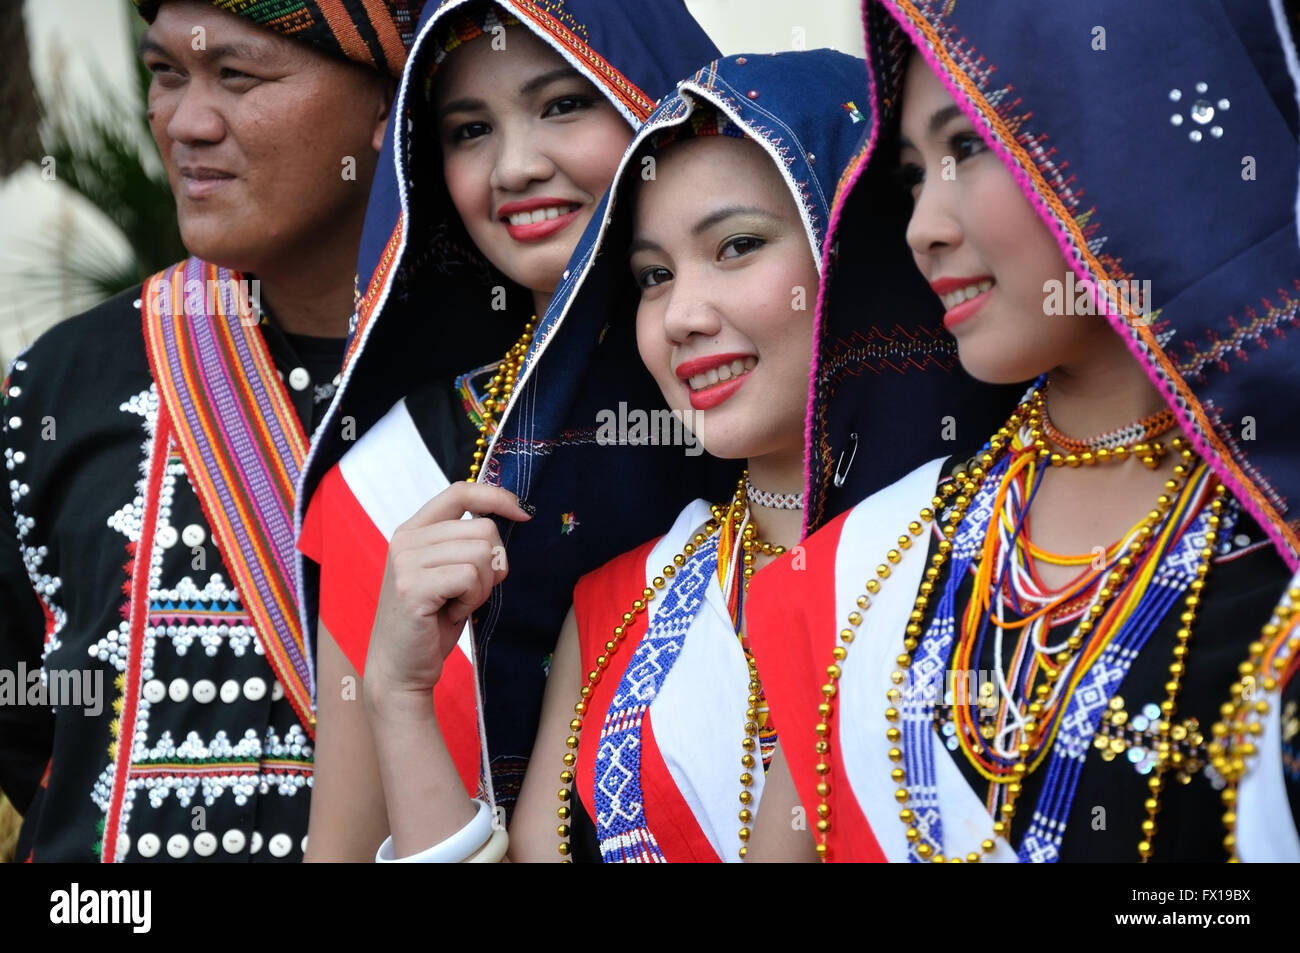 Kadazan dusun tribe in traditional costume during Sabah Harvest festival celebration in Kota Kinabalu, sabah Borneo, Malaysia. Stock Photo